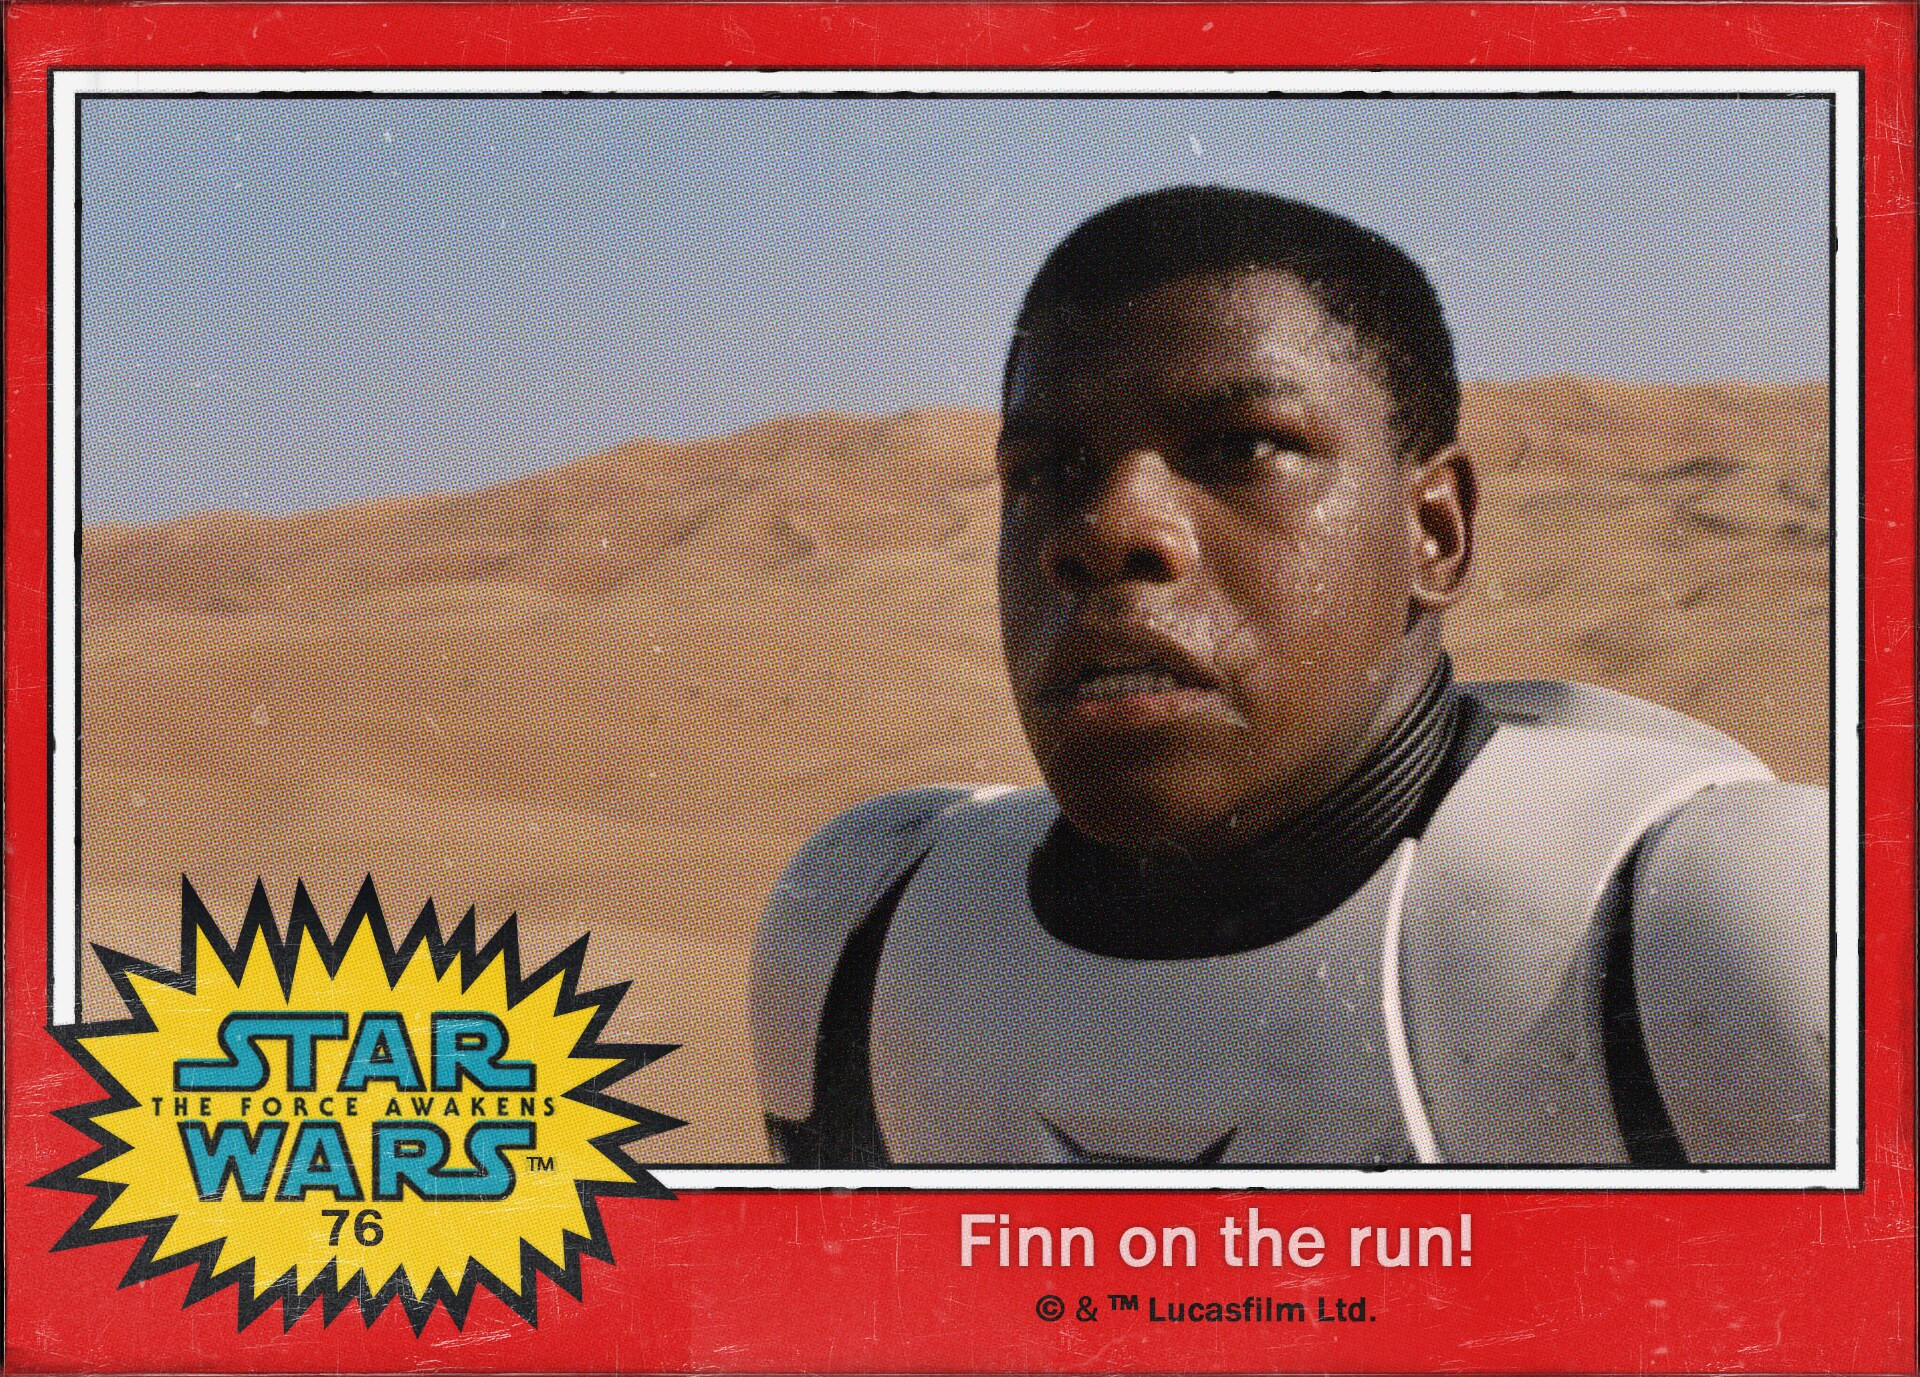 Finn on the run! Star Wars: The Force Awakens Digital Trading Card #76